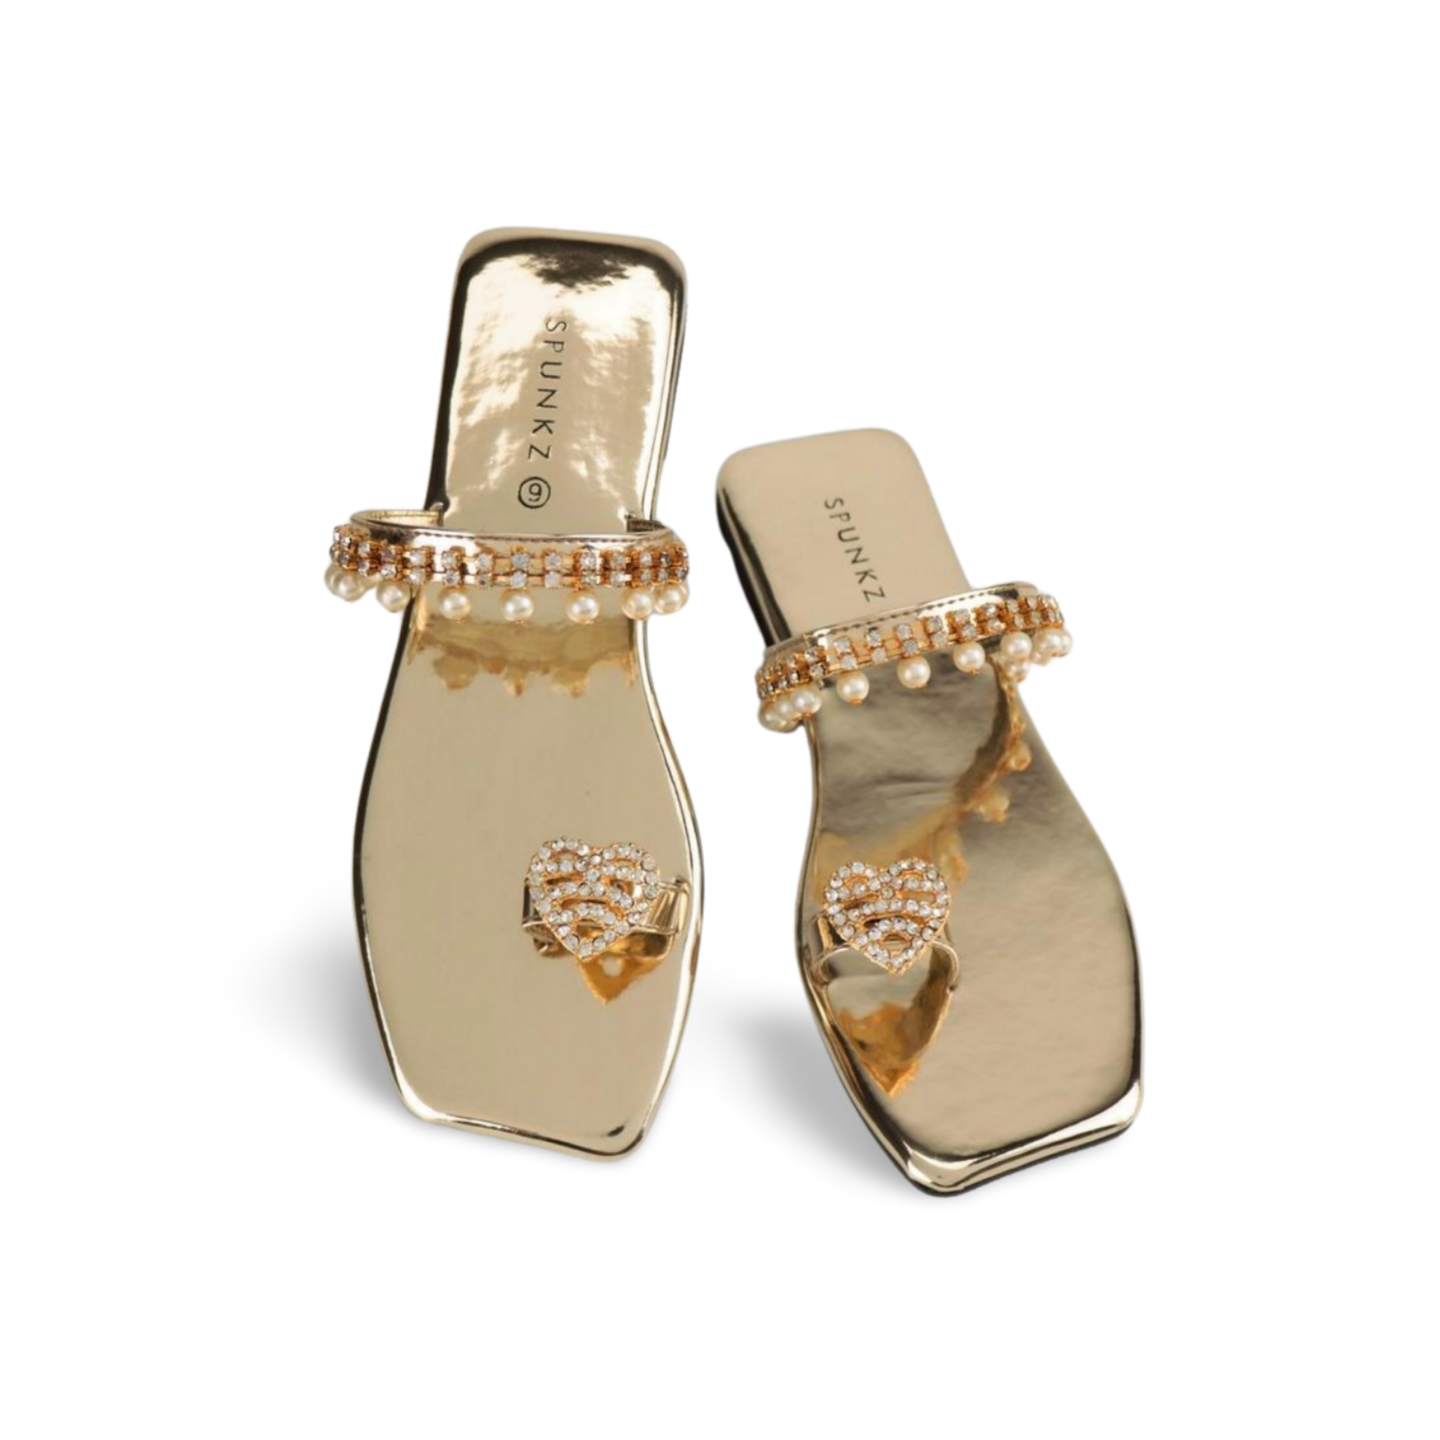 Elegant Rhinestone and Pearl Embellished Open-Toe Sandal for Women